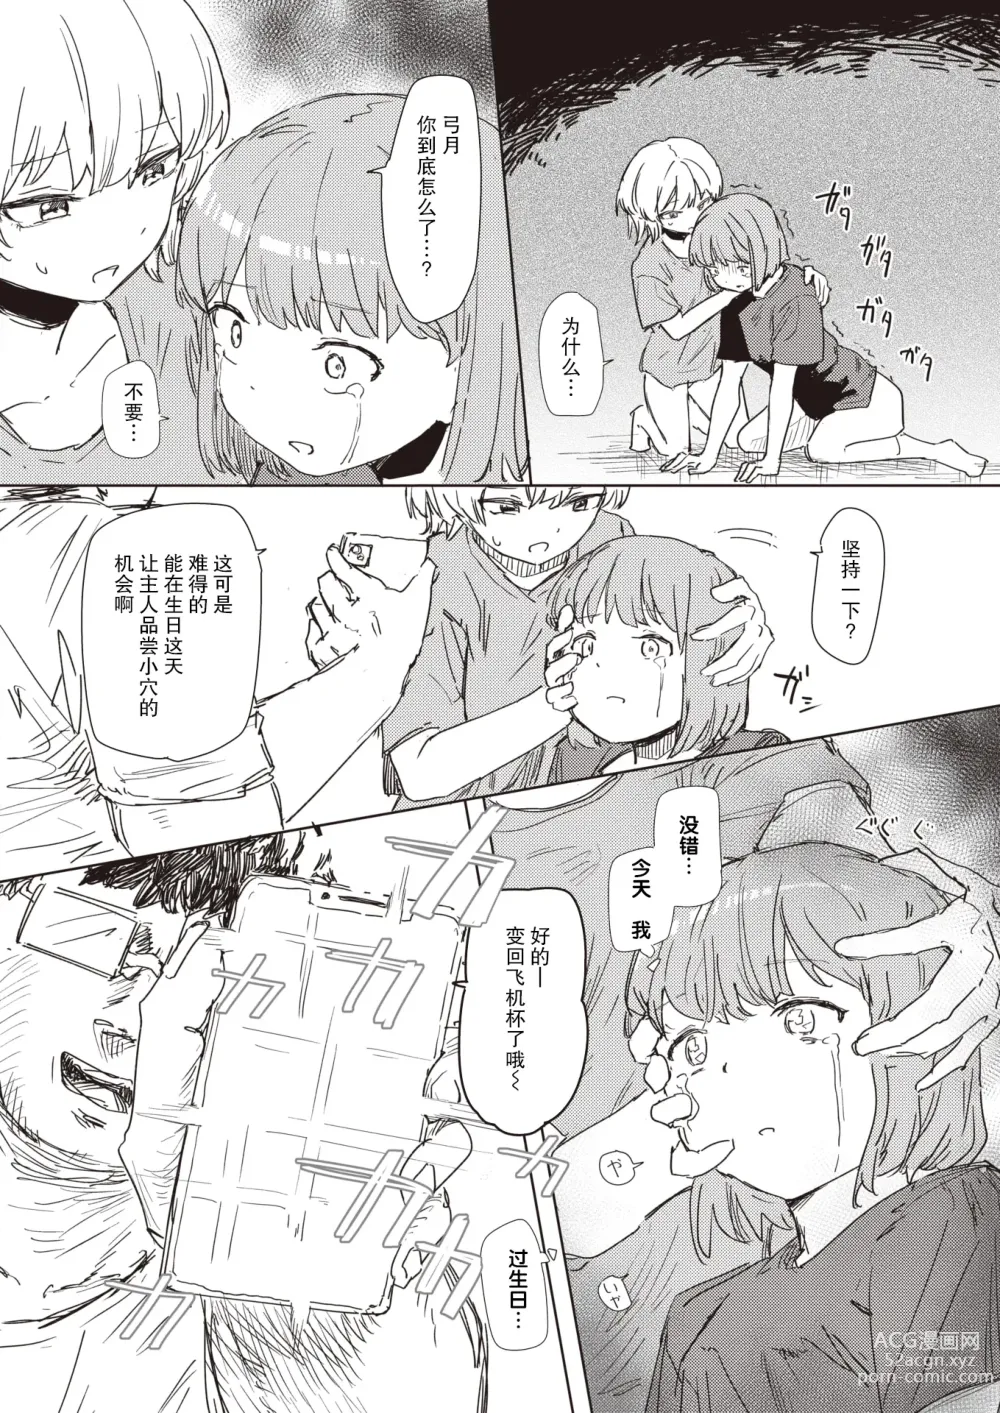 Page 21 of manga Unhappy Birthday